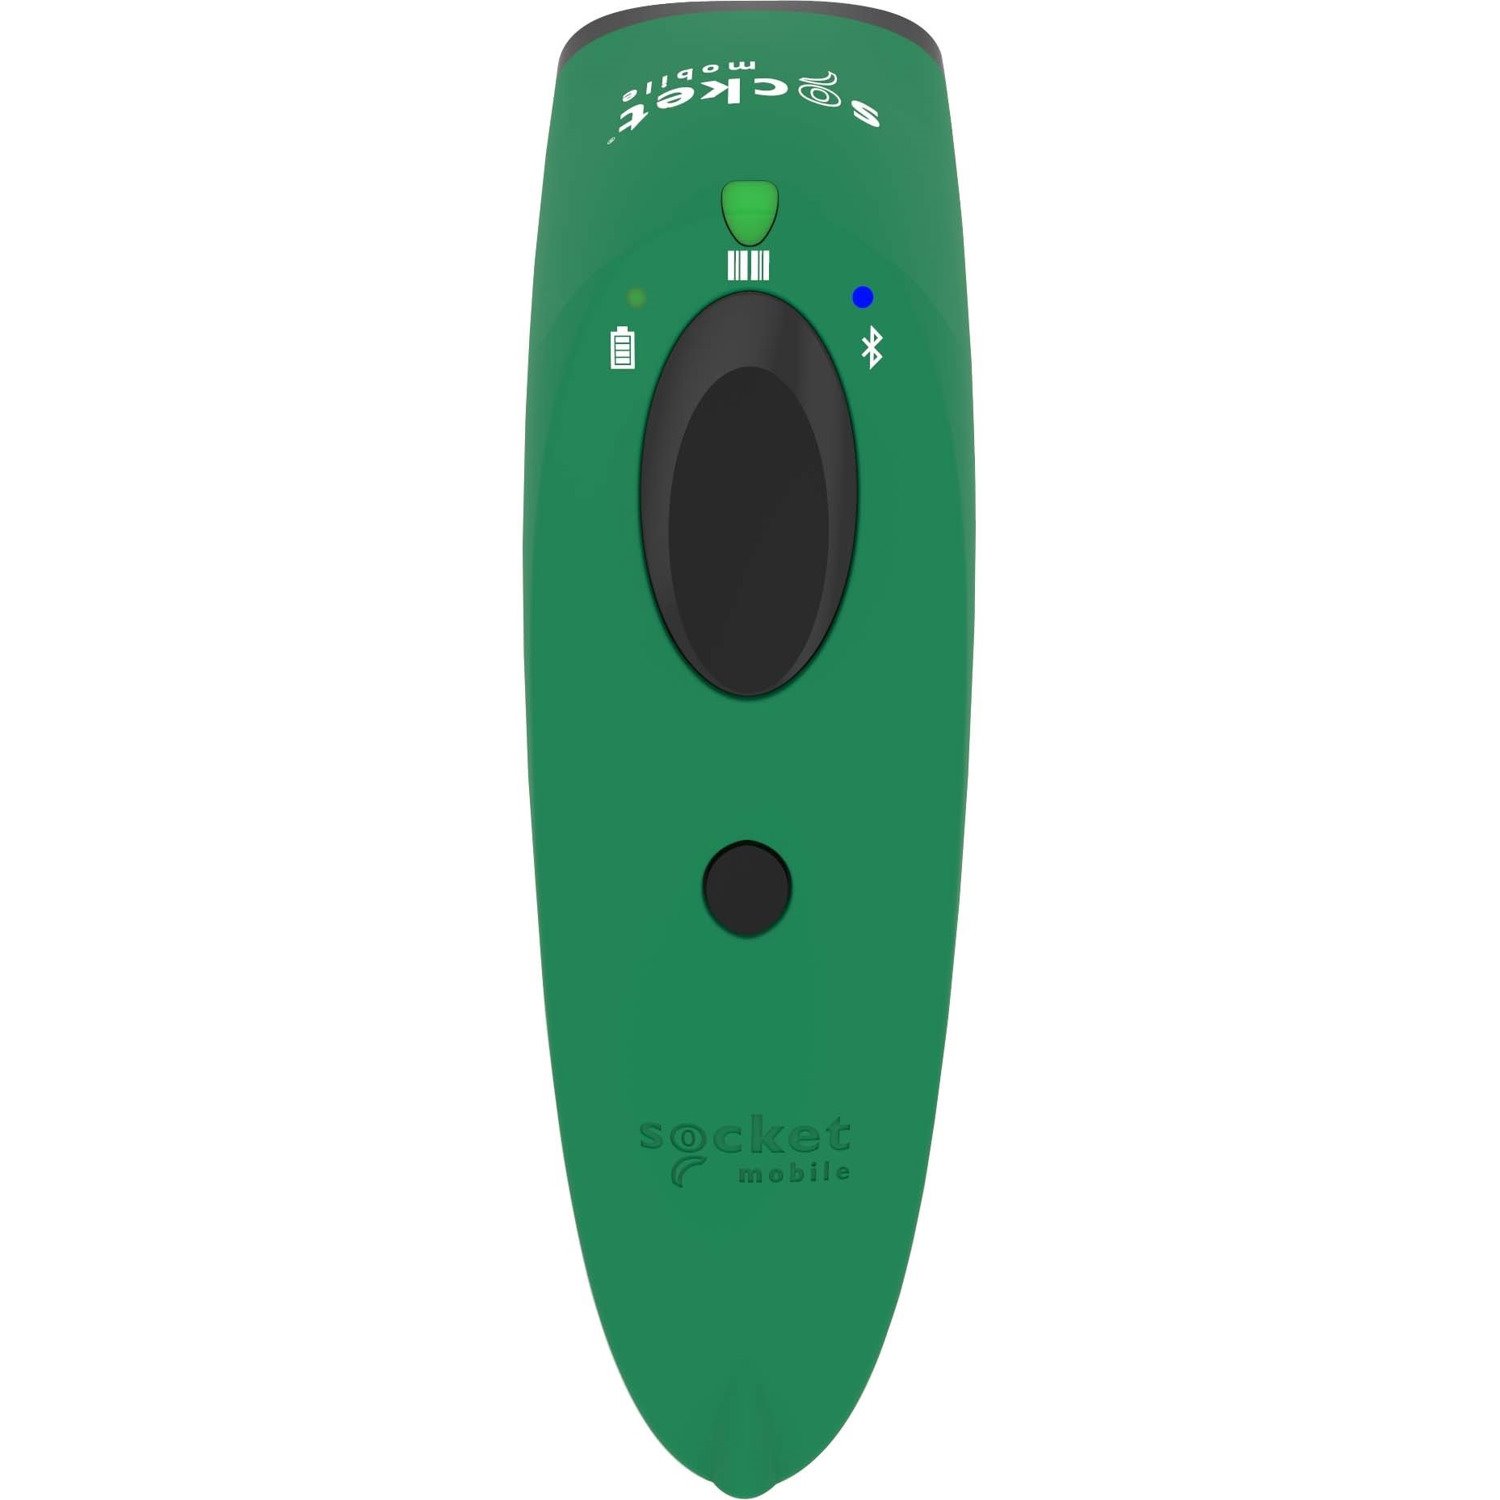 Socket Mobile SocketScan S740 Handheld Barcode Scanner - Wireless Connectivity - Green